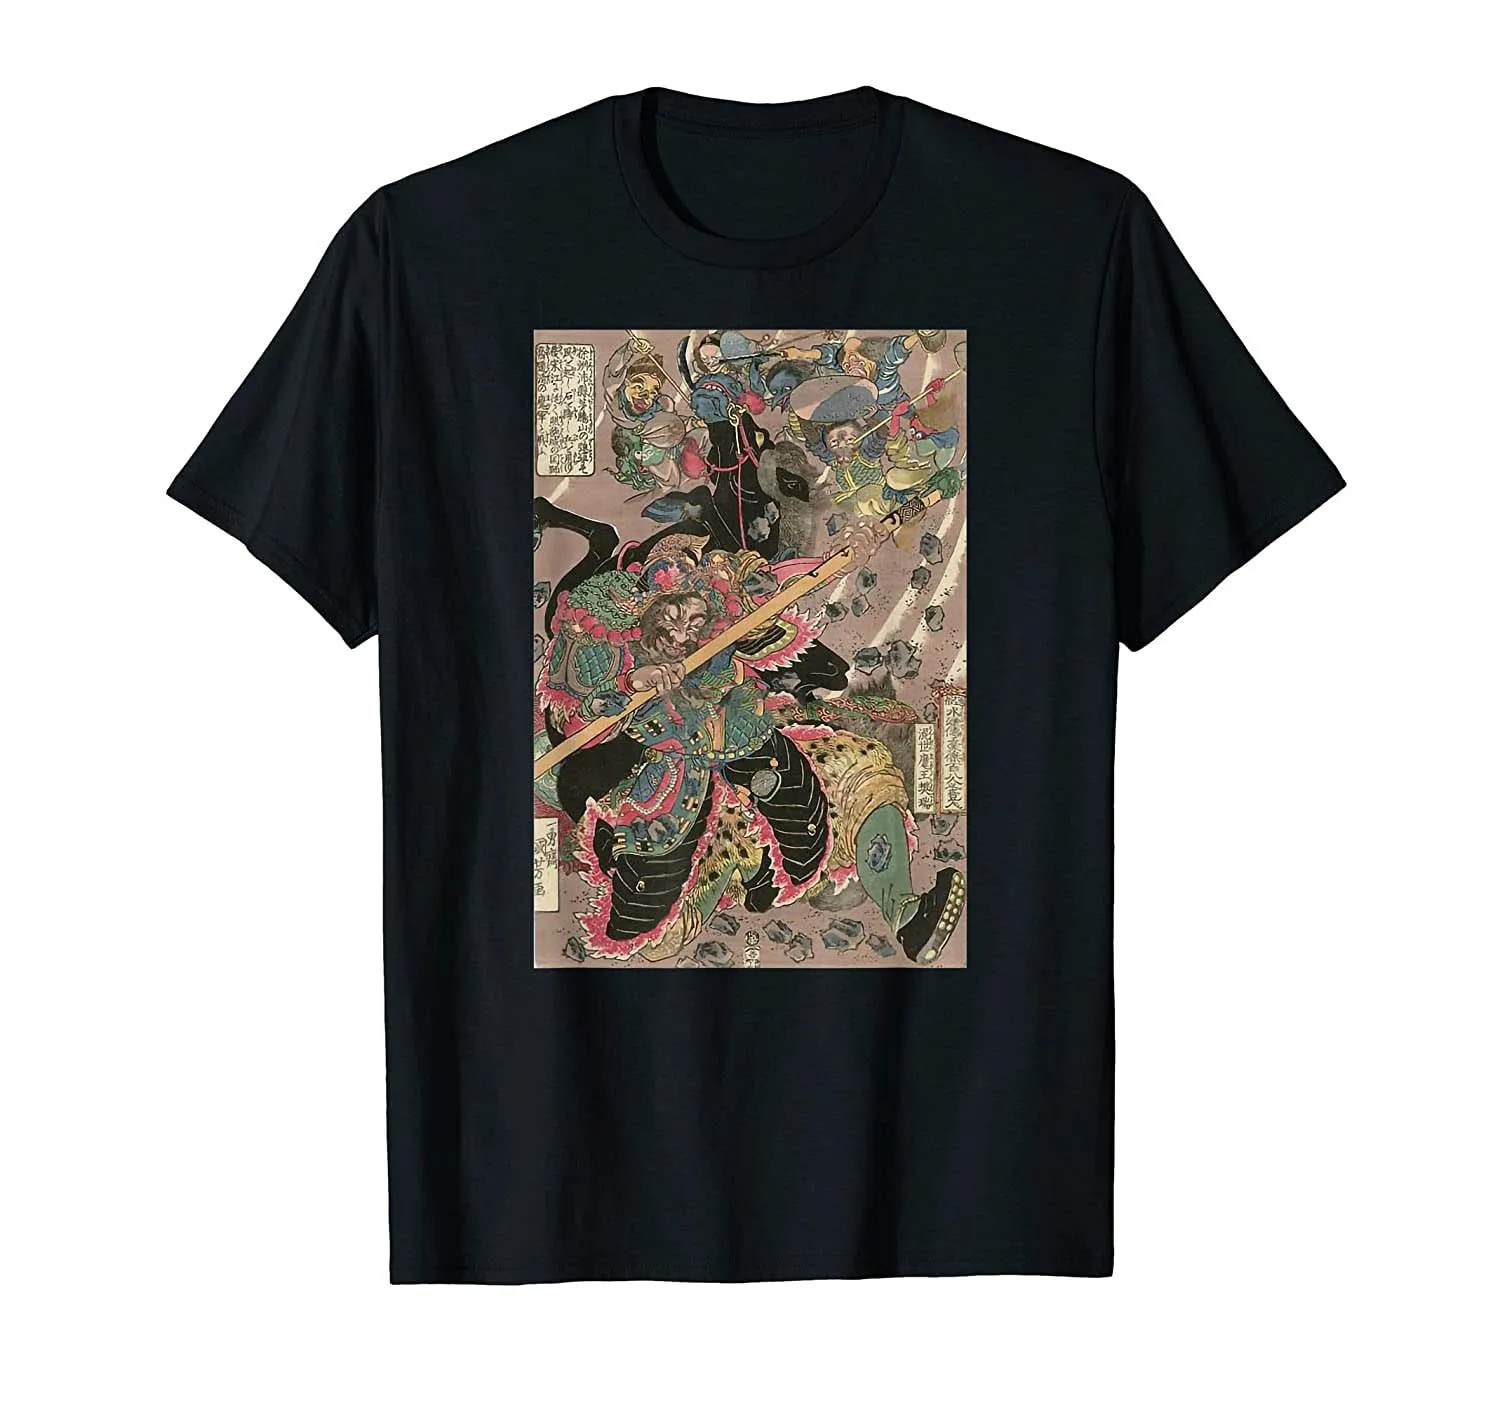 Japanese Aesthetic Retro Vintage Japan Woodblock Art Print T-Shirt Men Cotton Tshirt Tees Tops Harajuku Streetwear